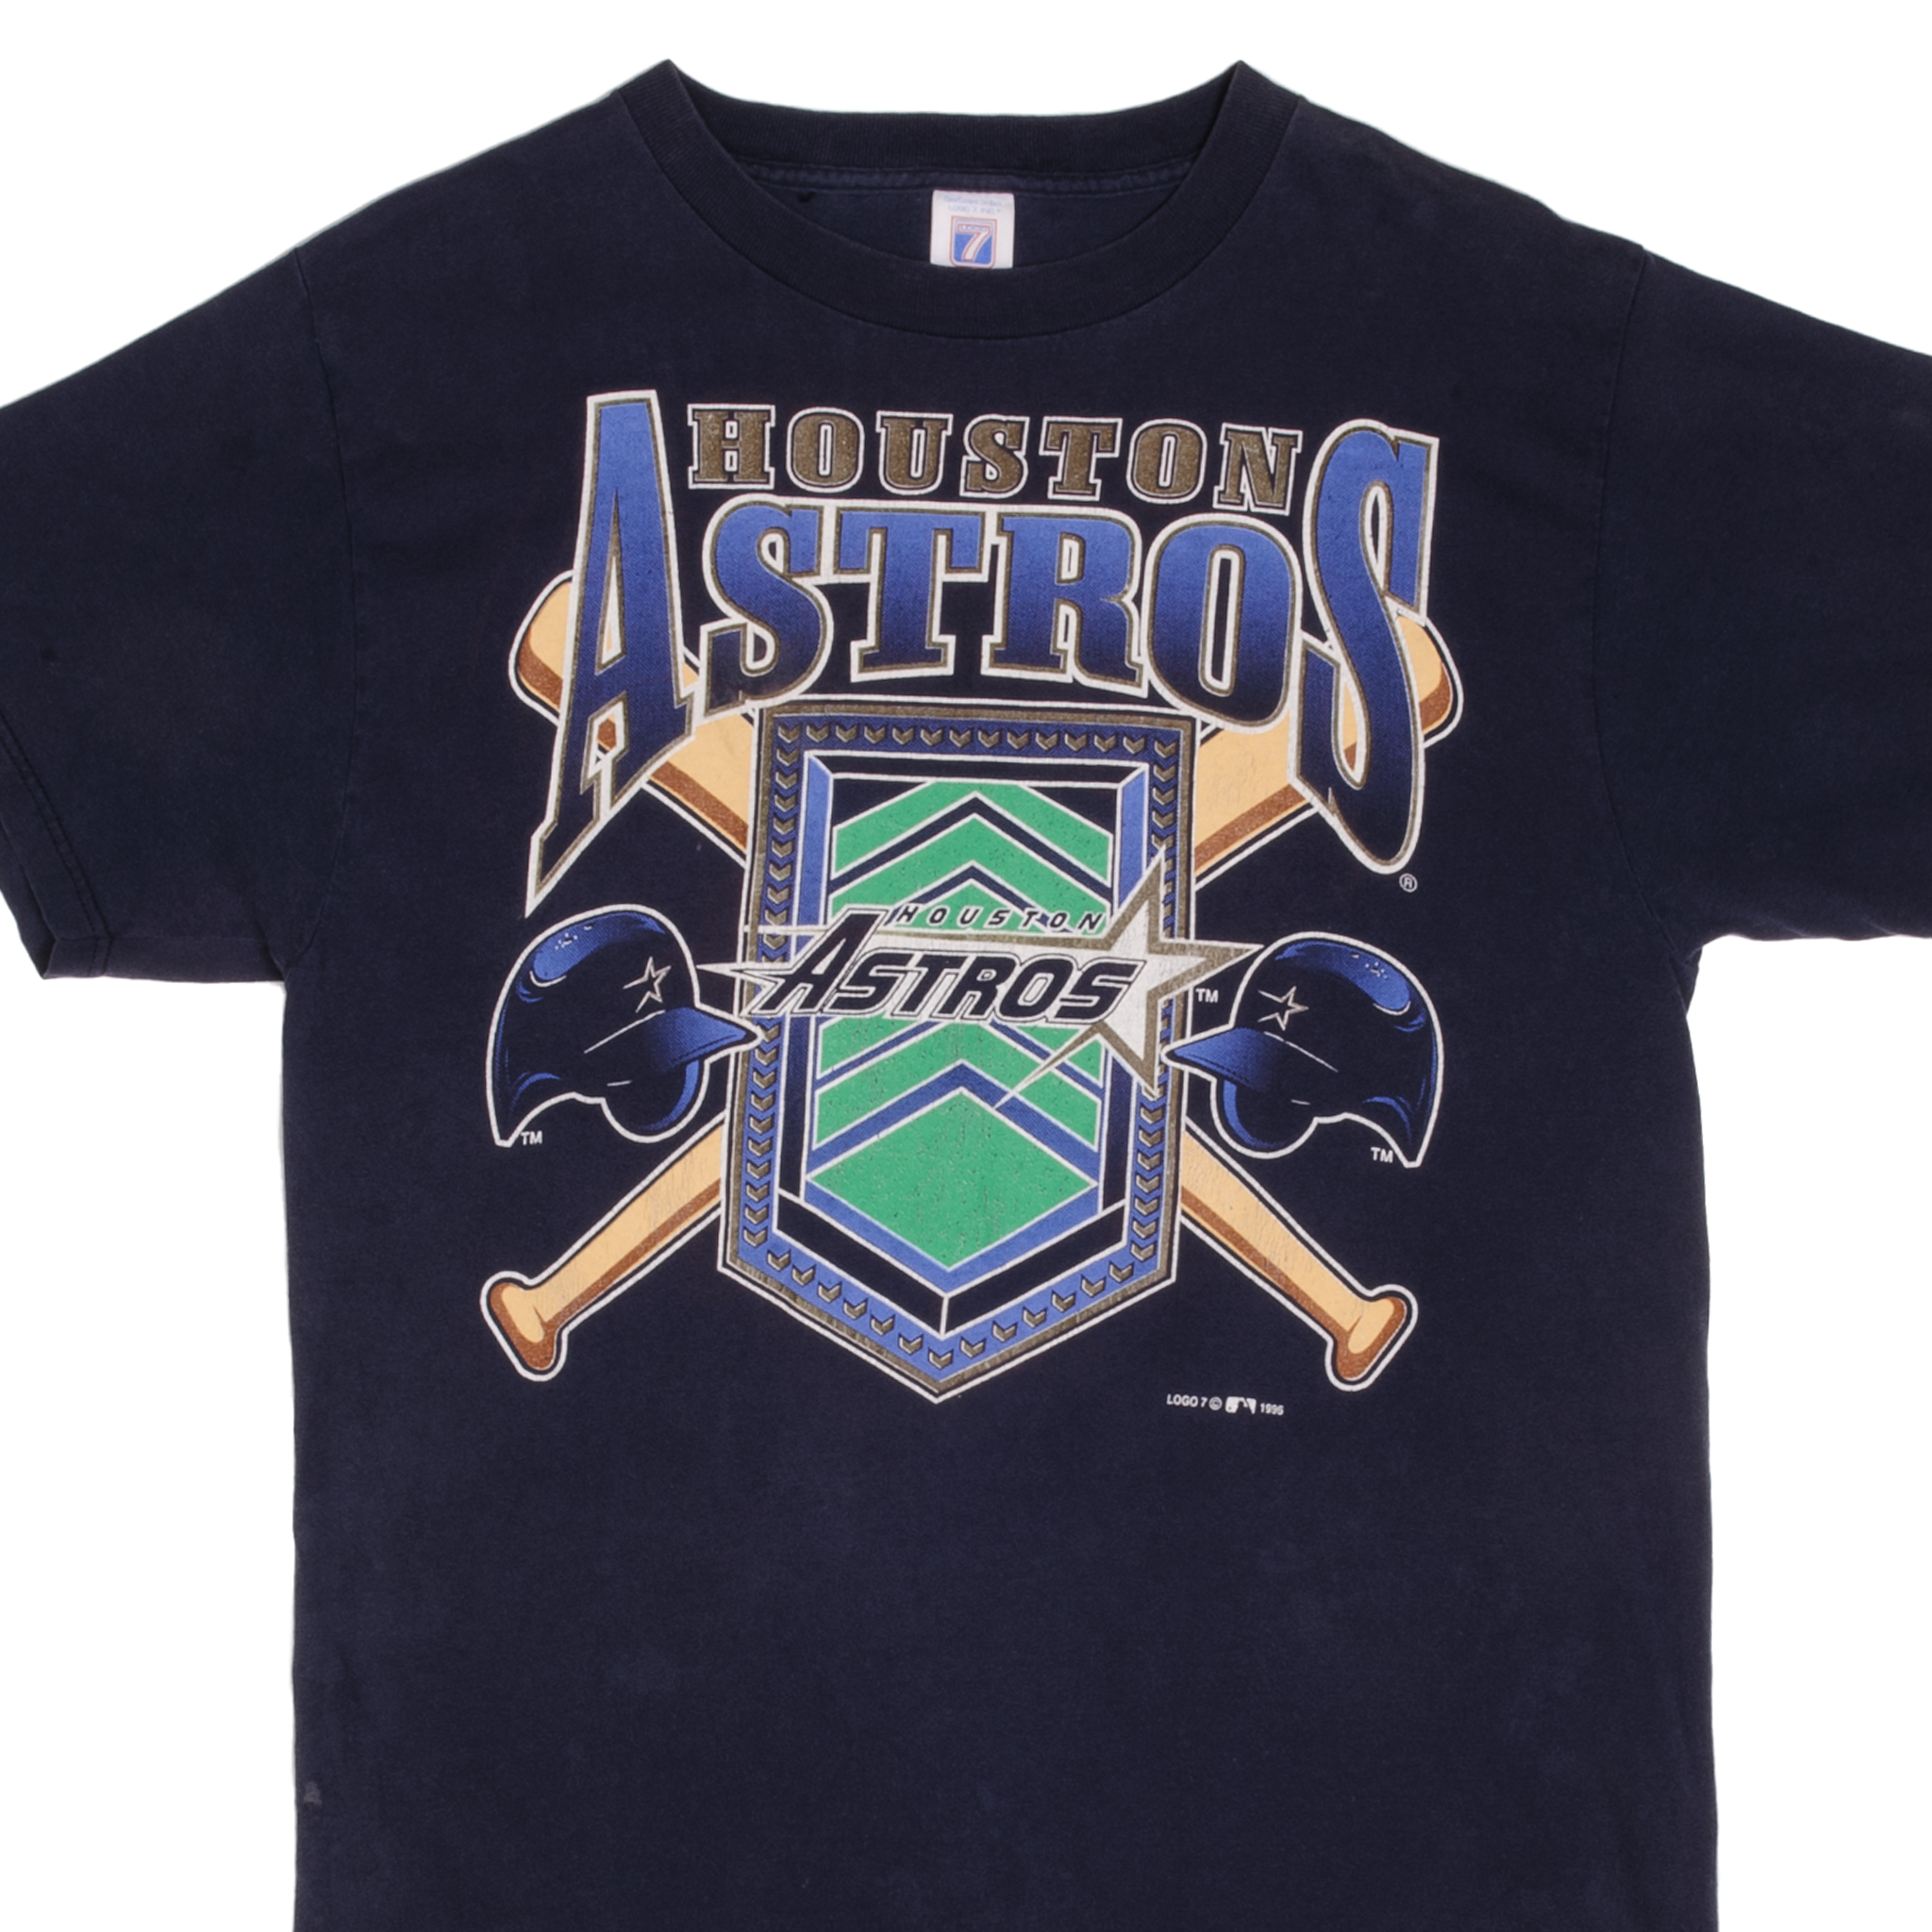 Vintage 1997 MLB All Star Shirt Size Large